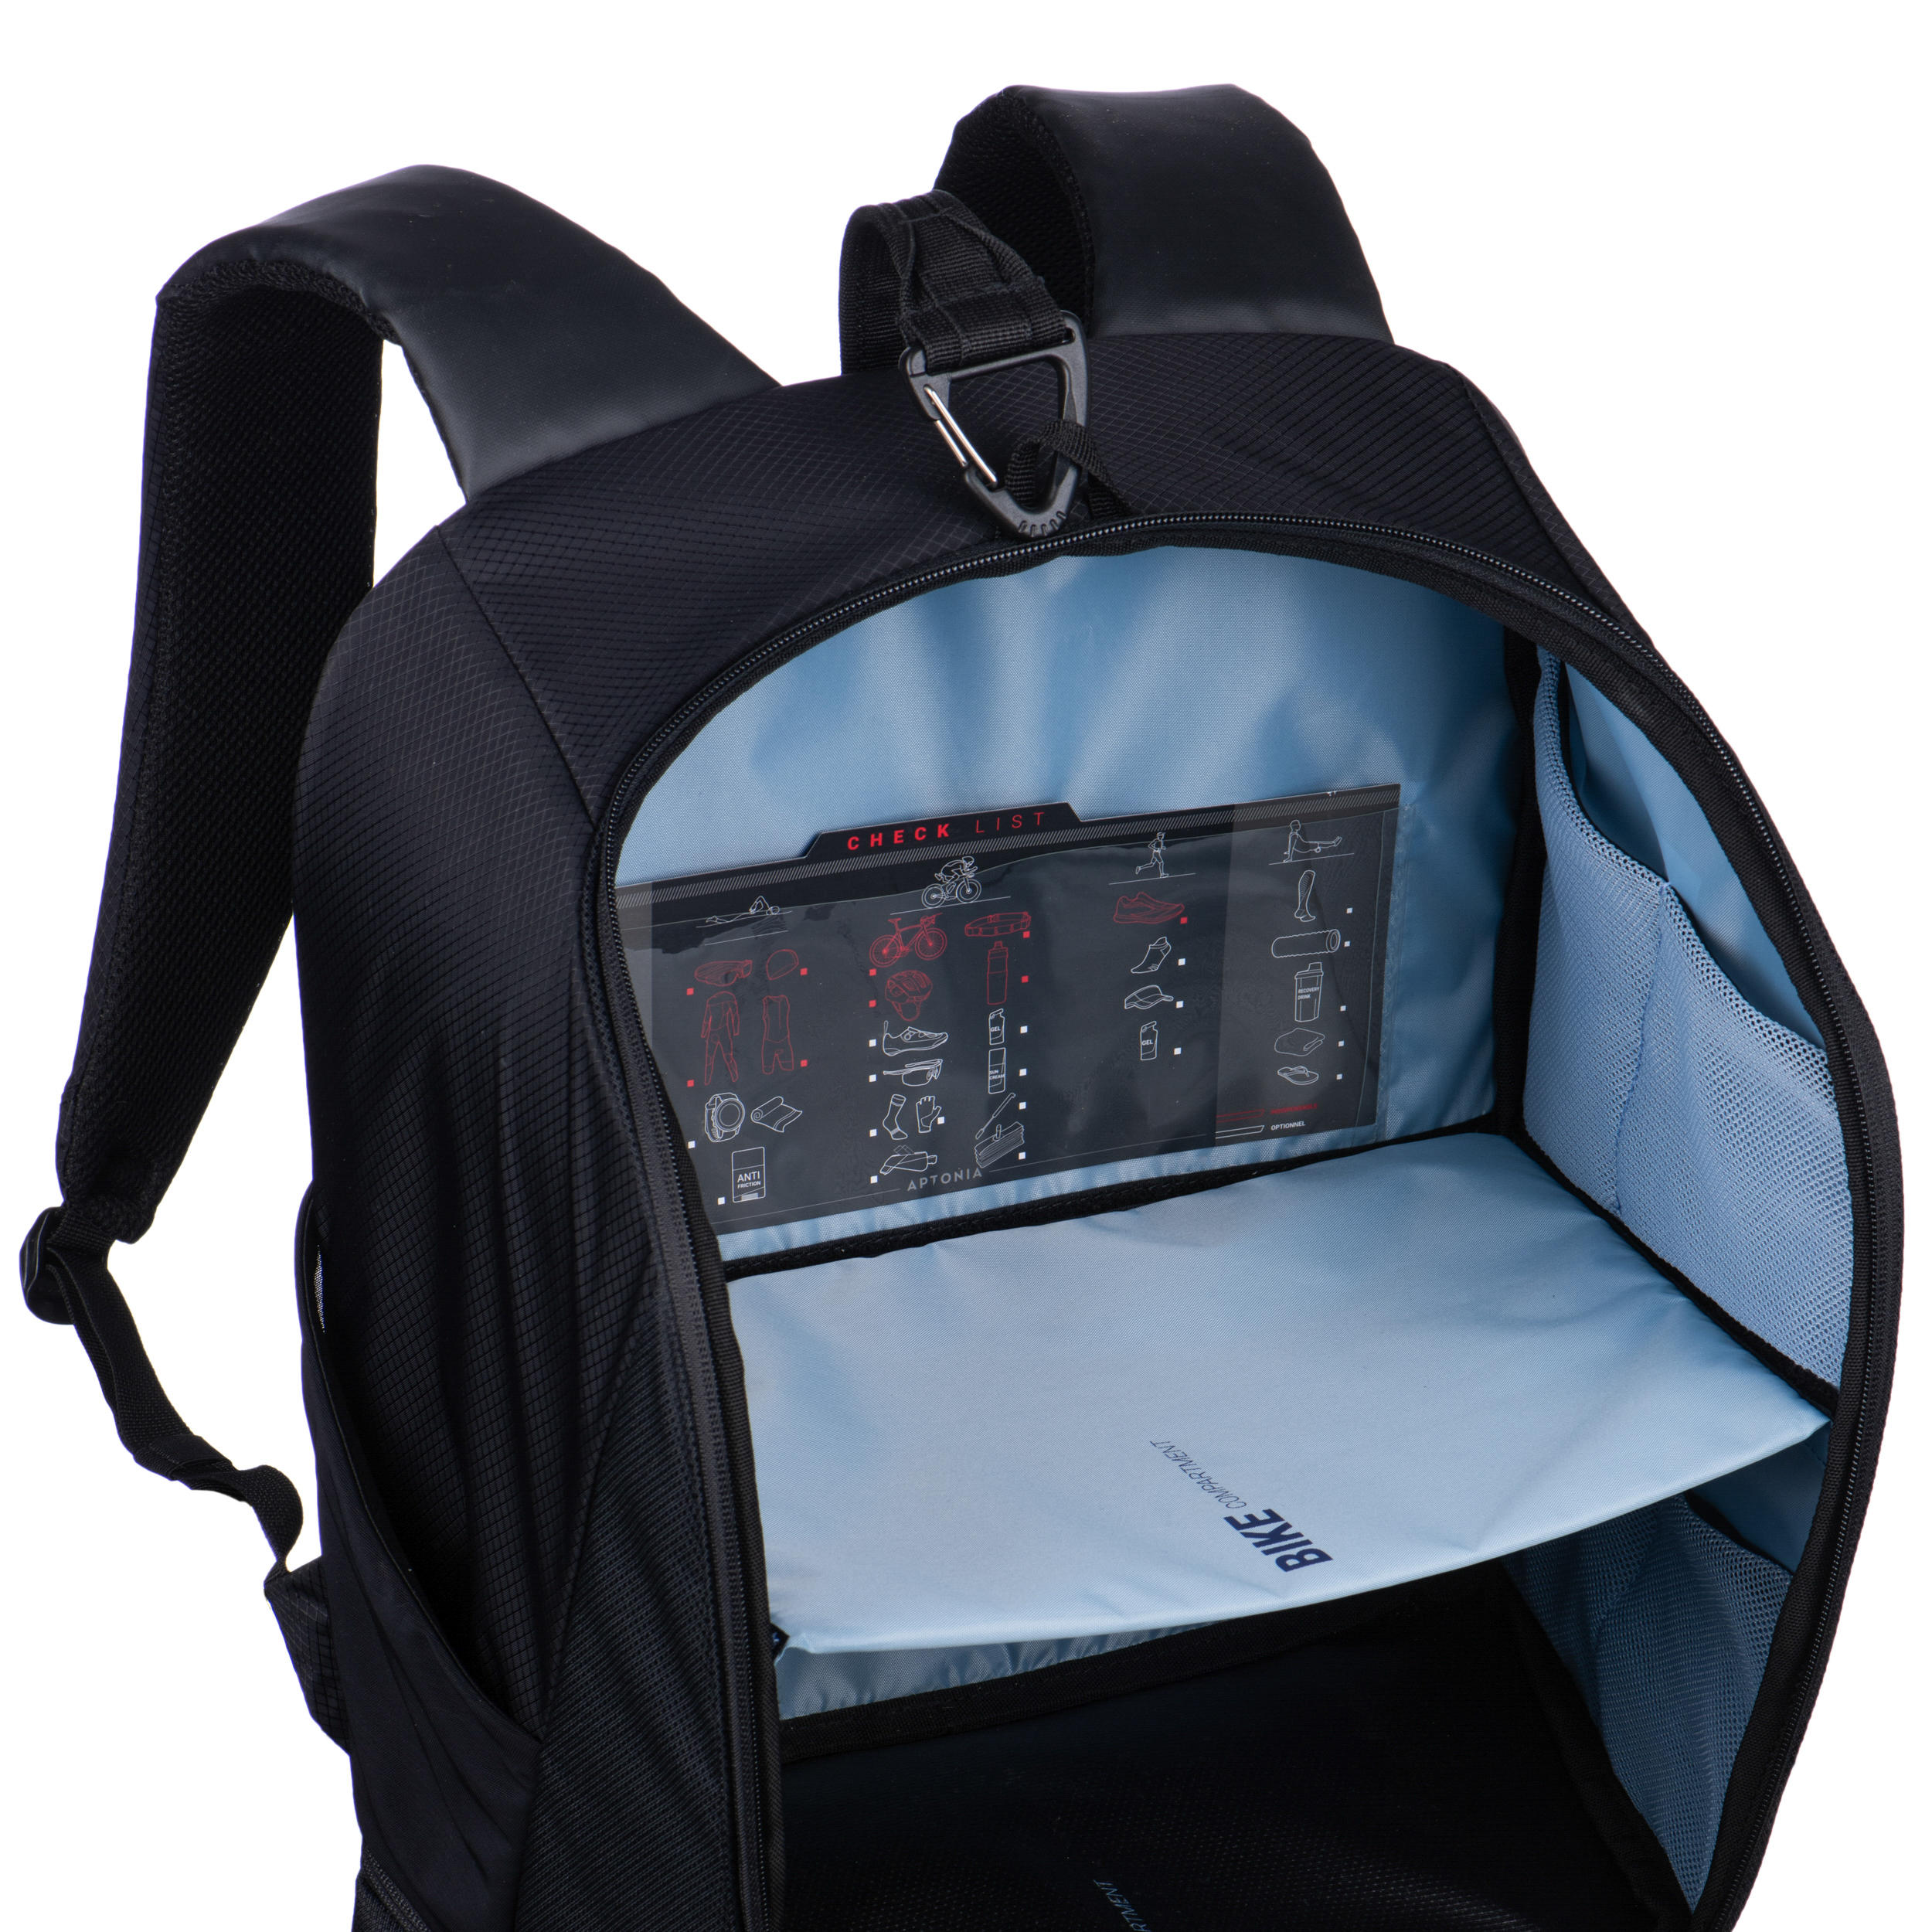 Aptonia Triathlon Transition Bag 35L - Black/Blue 7/10